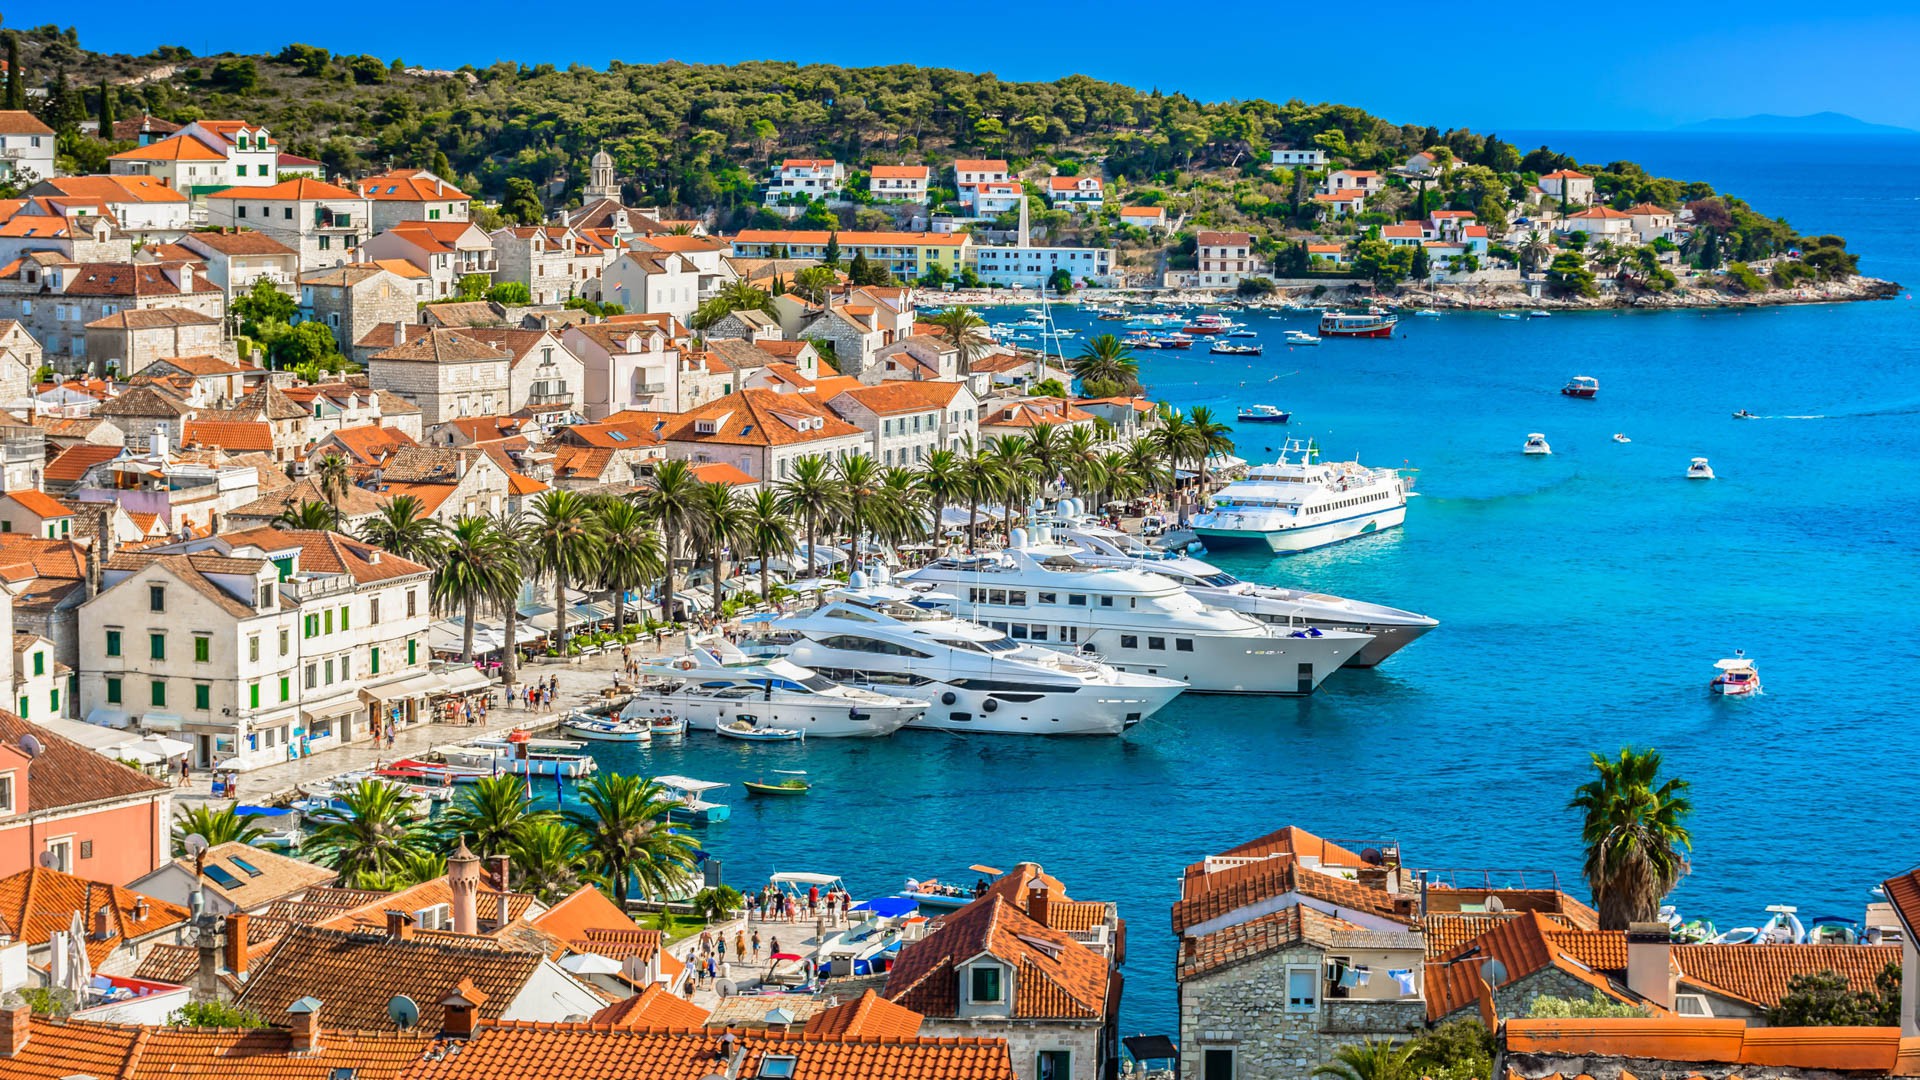 Hvar - Adriatic Sea | Croatia Cruise Croatia Cruise